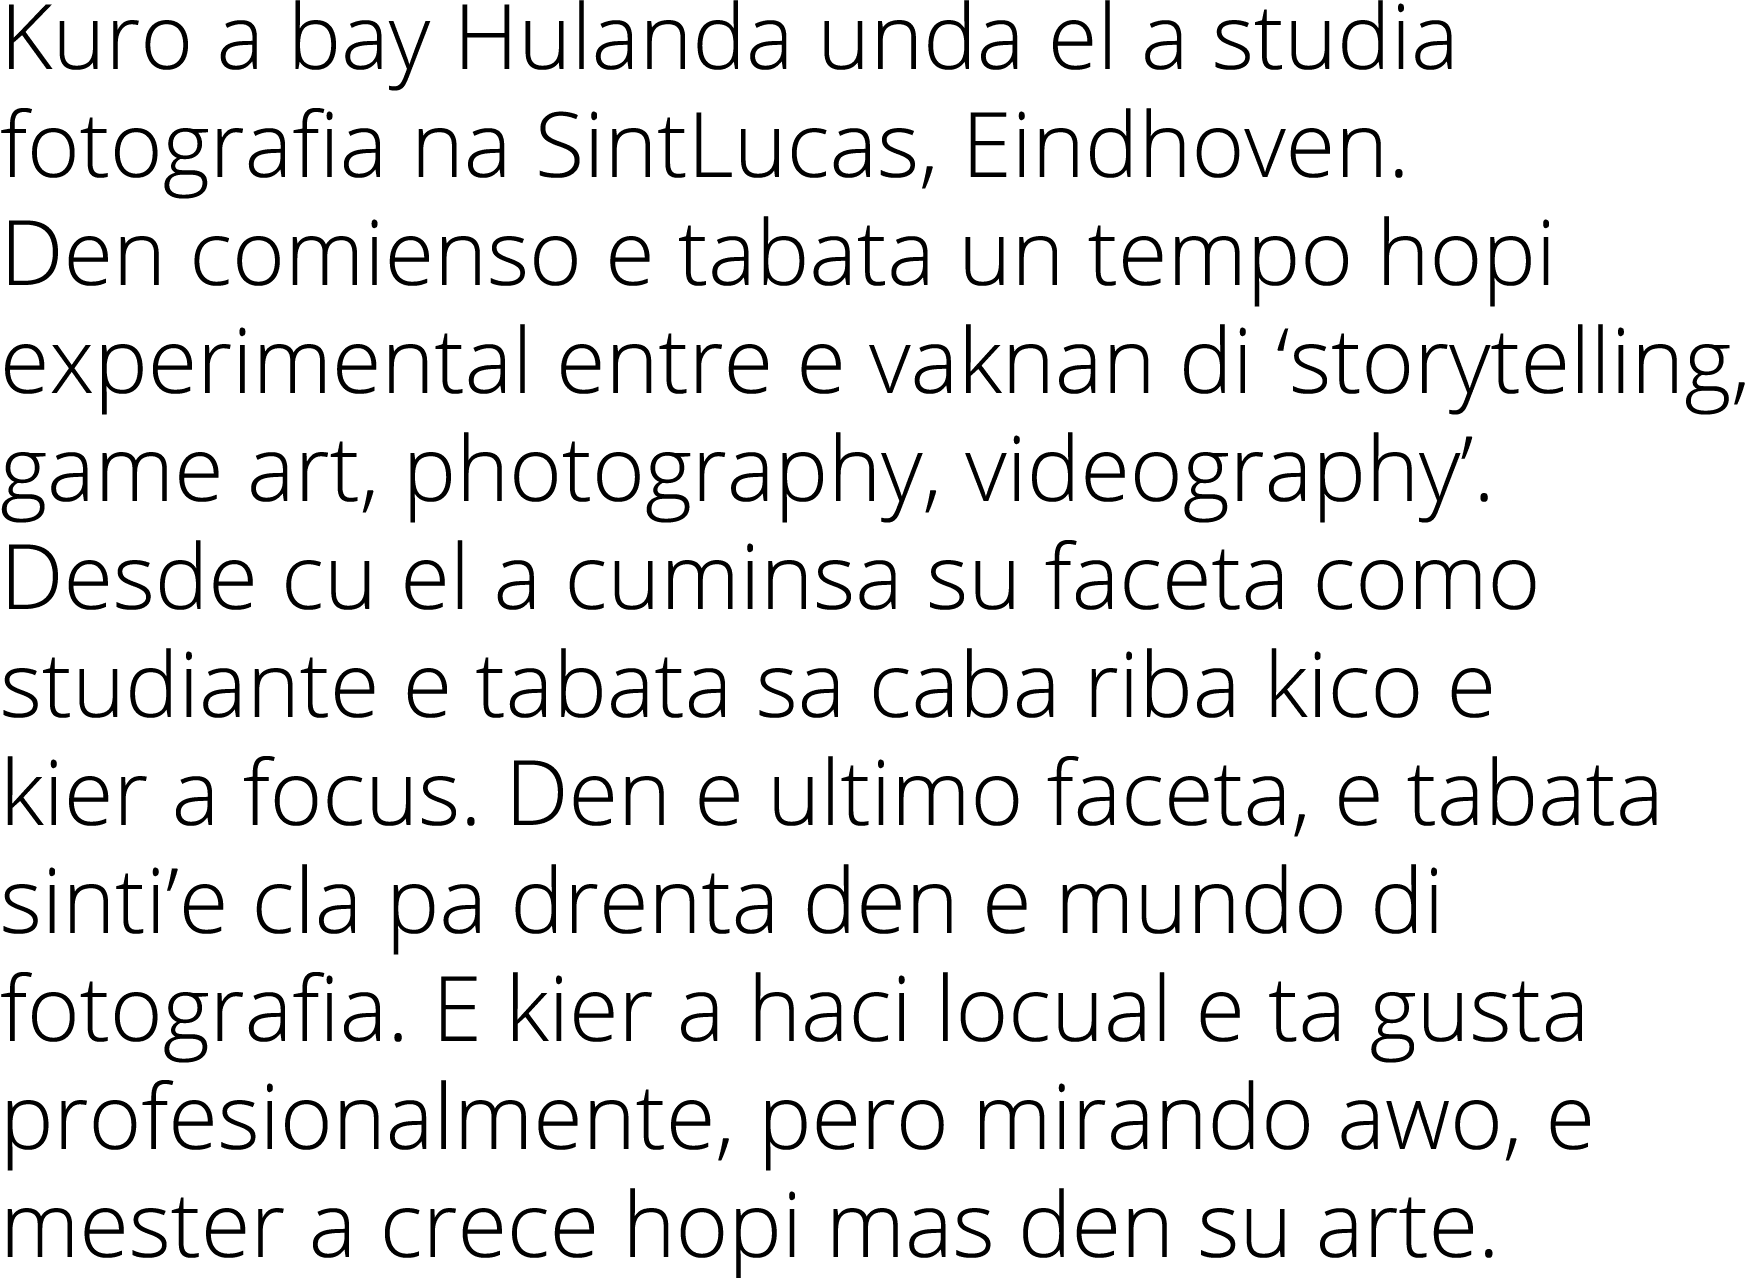 Kuro a bay Hulanda unda el a studia fotografia na SintLucas, Eindhoven. Den comienso e tabata un tempo hopi experimen...